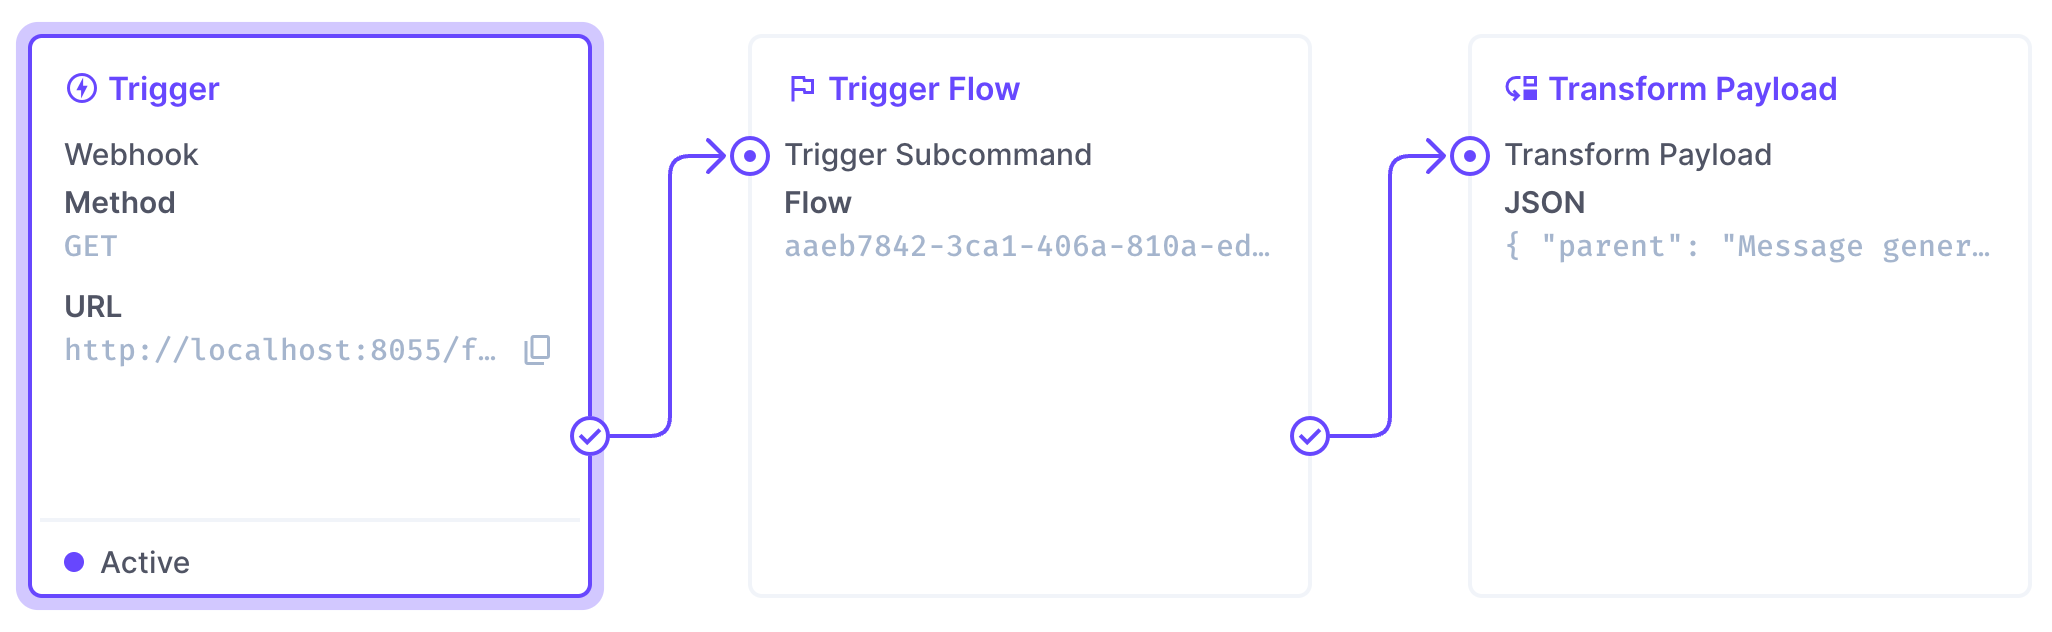 Main parent flow triggering a sub-command